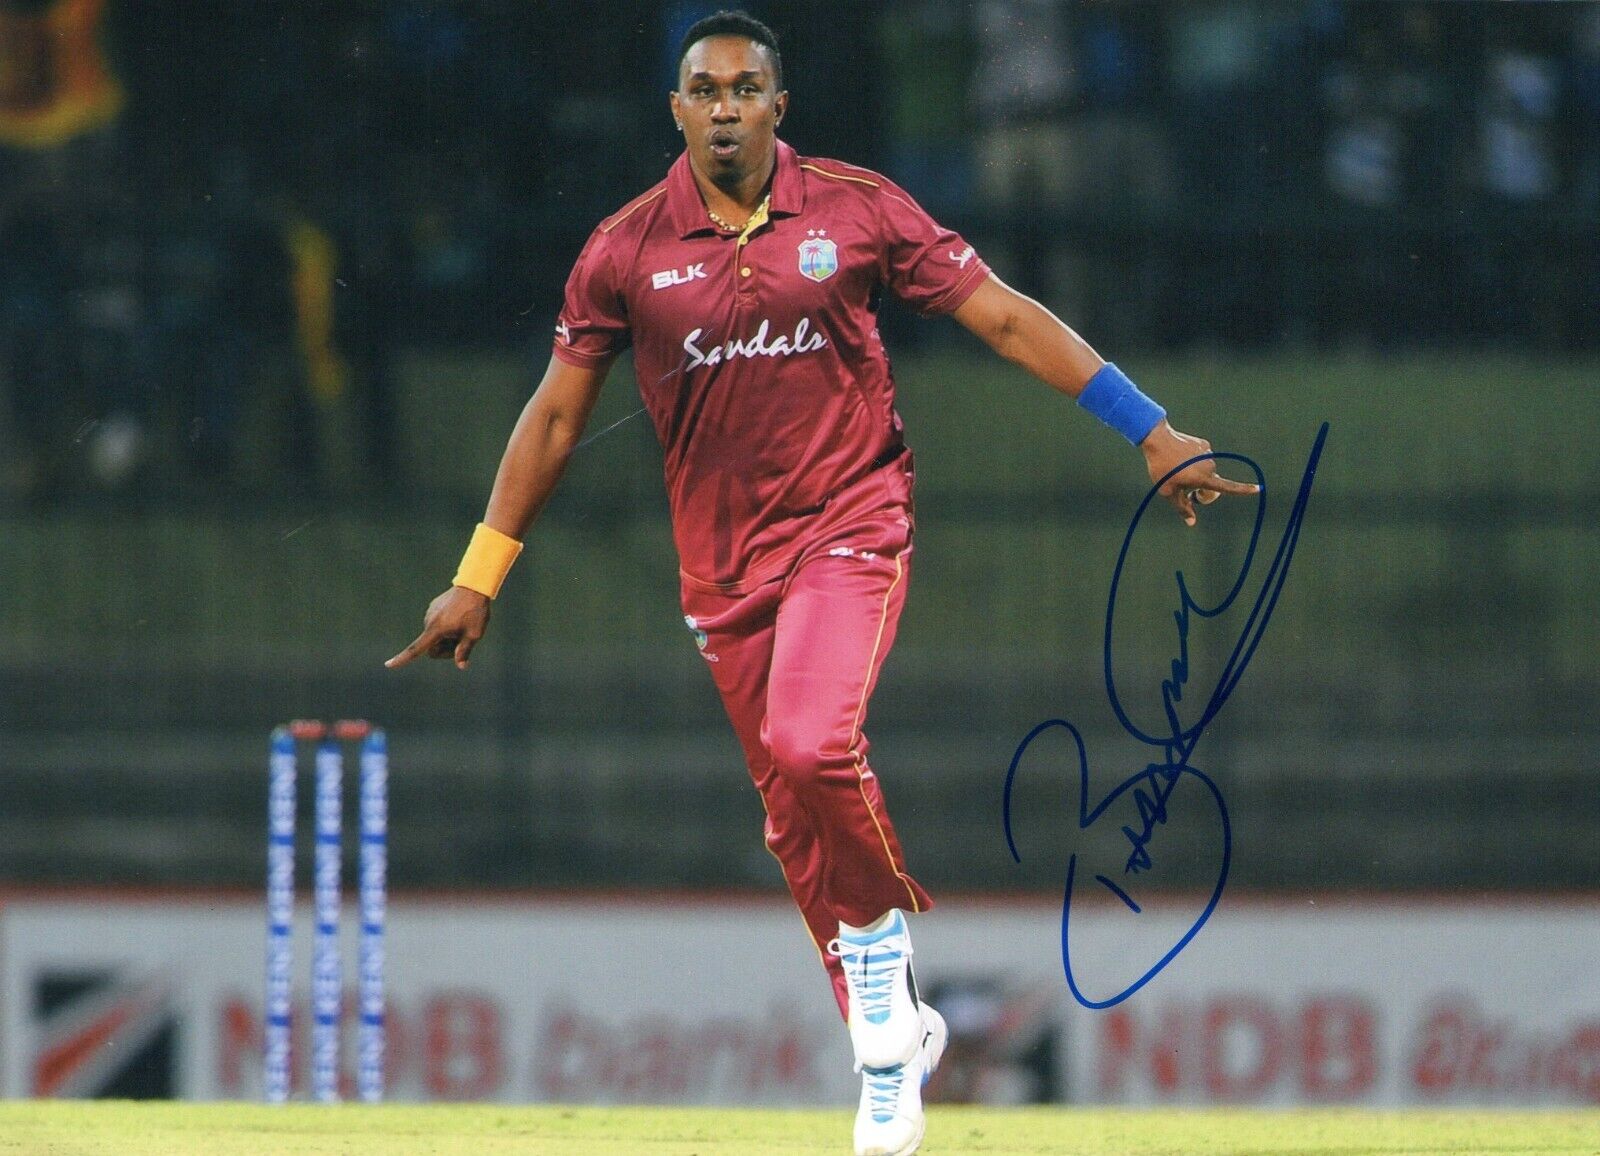 Original Autographed Photo of West Indies Cricketer Dwayne Bravo